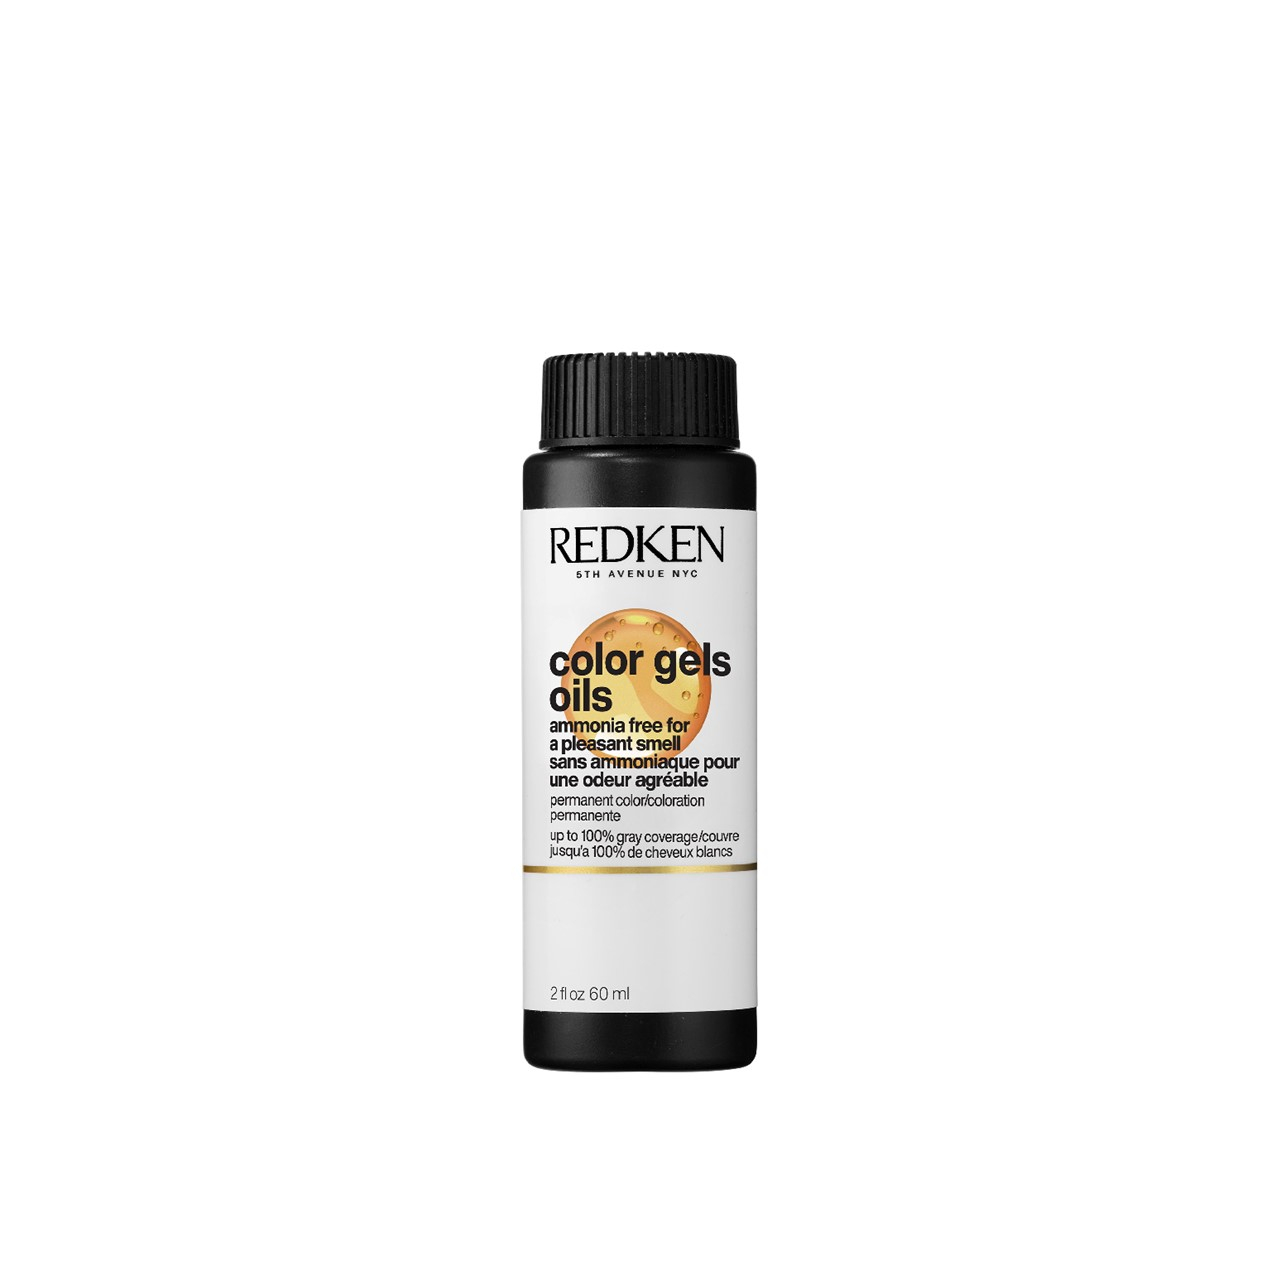 Redken Color Gels Oils 10NN Affogato Permanent Hair Dye 60ml (2.03 fl oz)